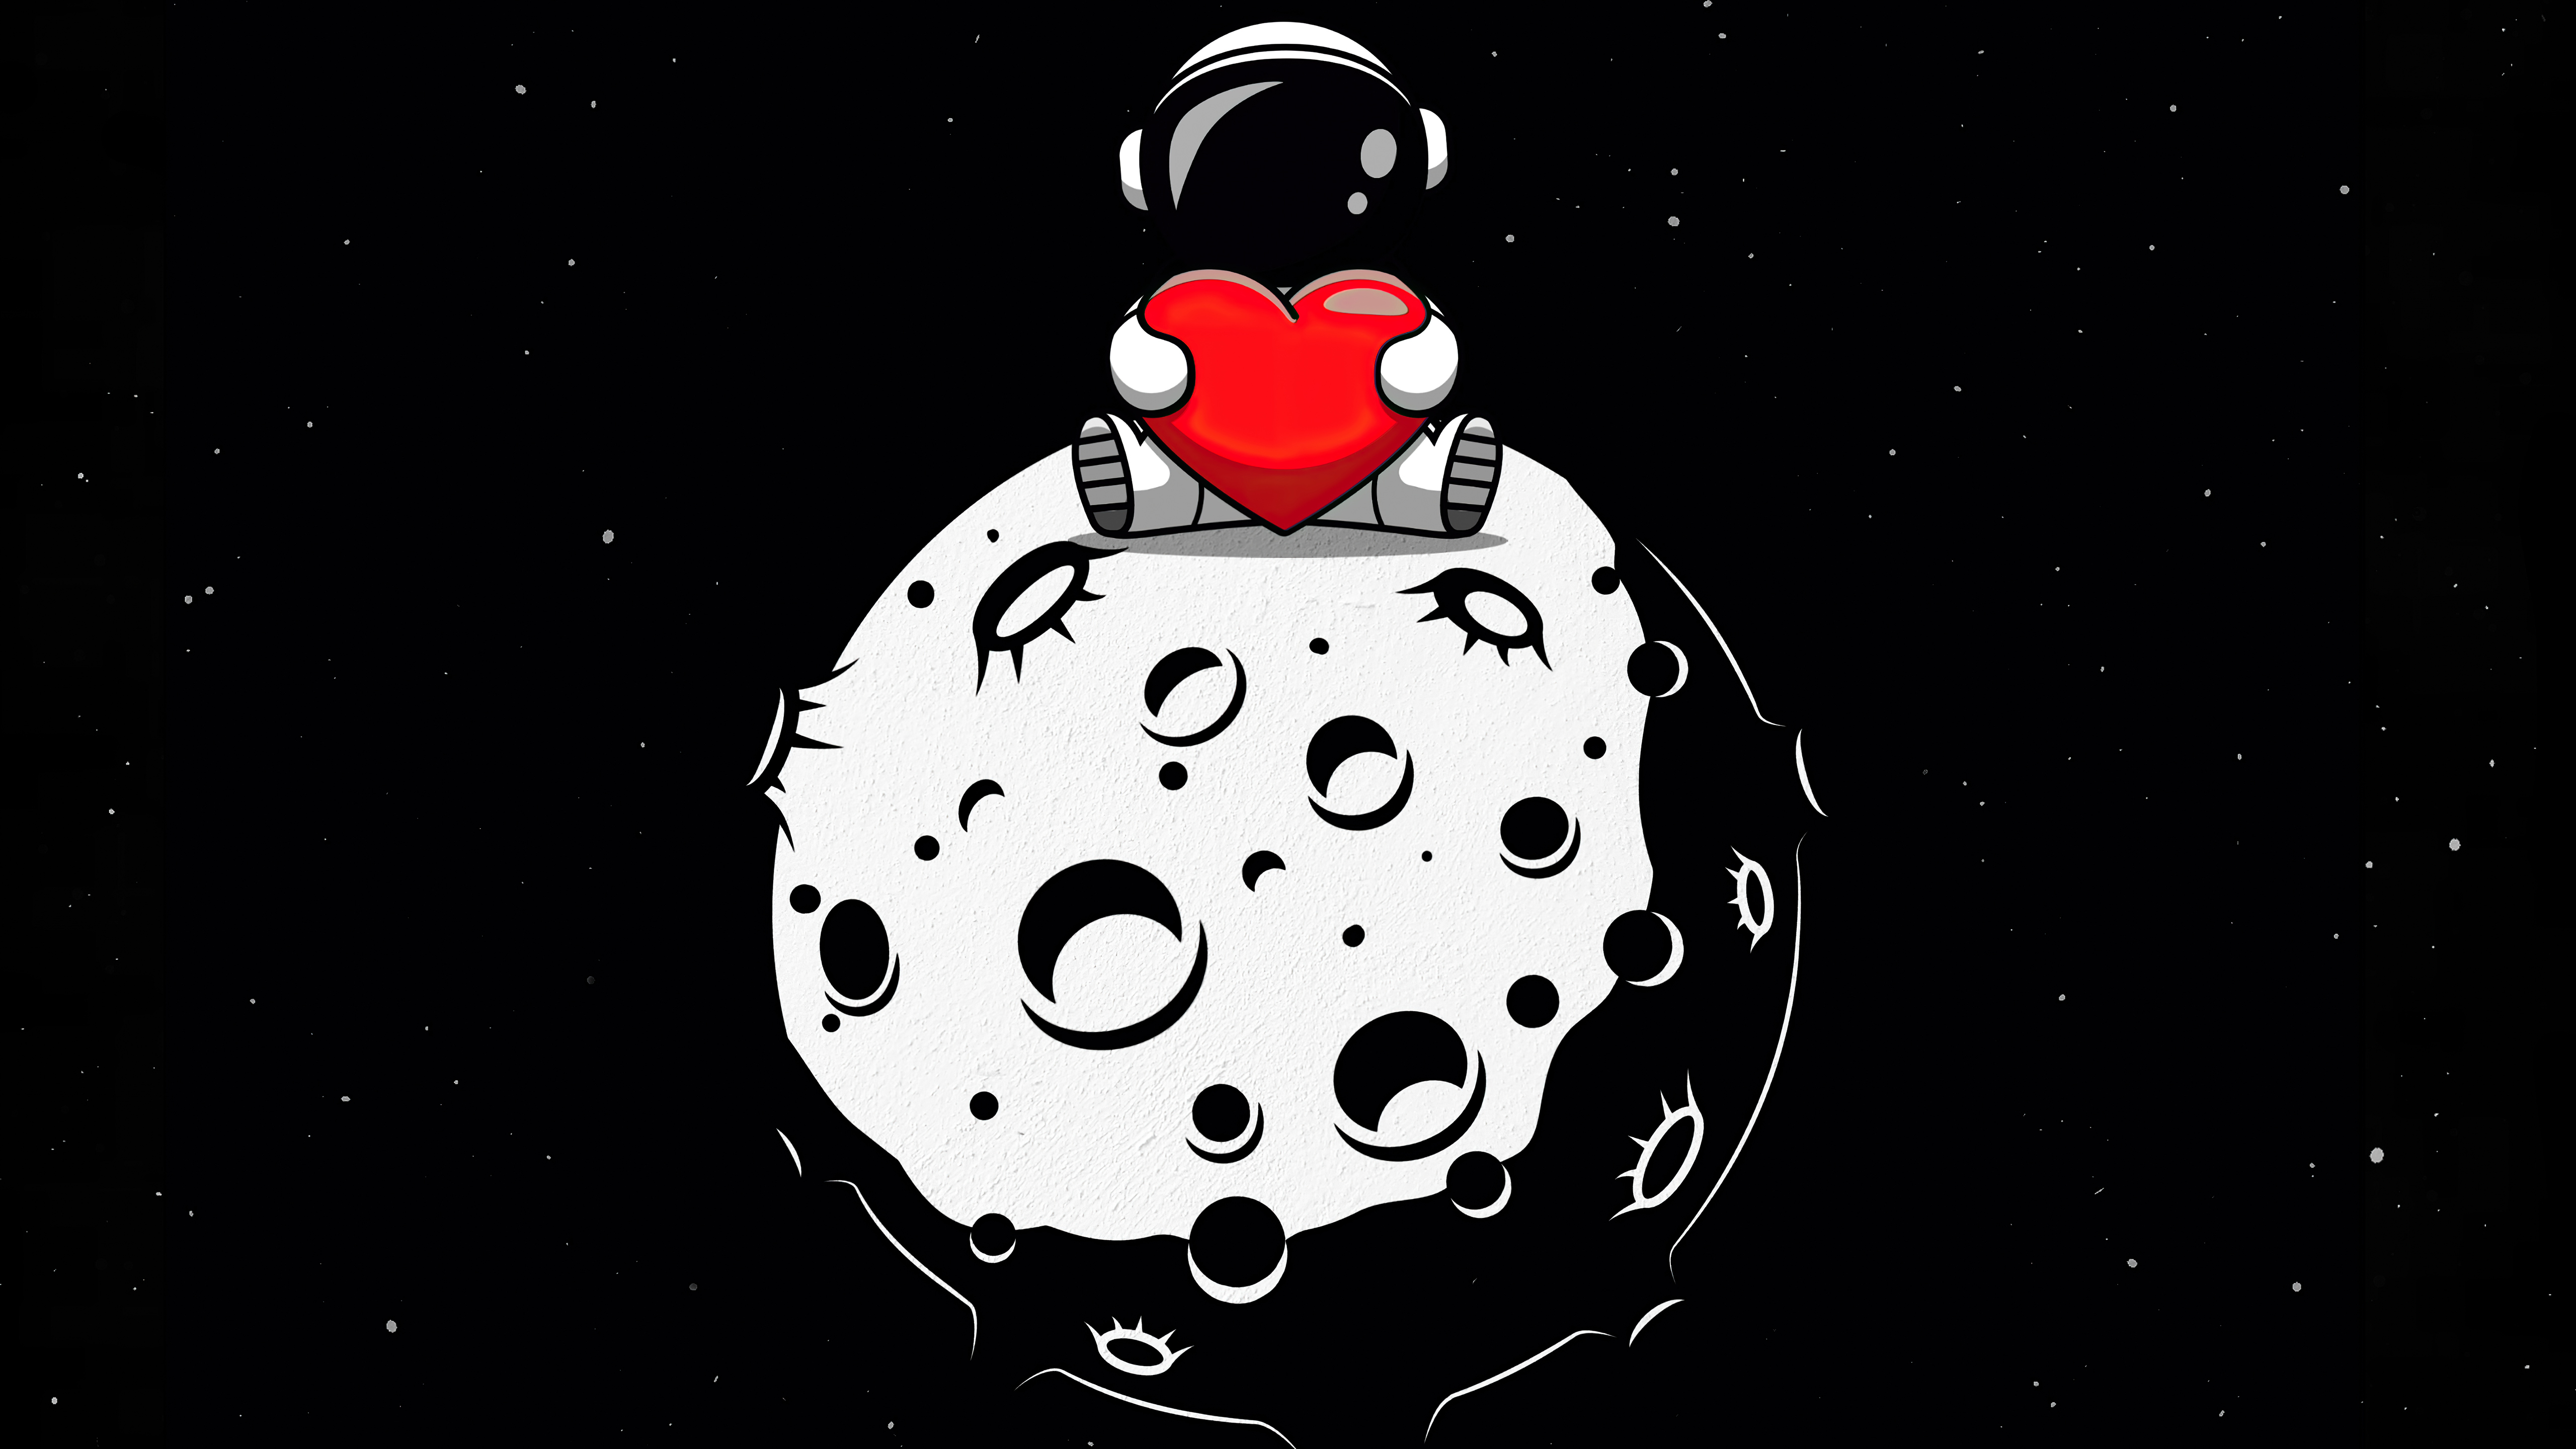 Red heart Wallpaper 4K, Astronaut, Planet, Black/Dark, #4408